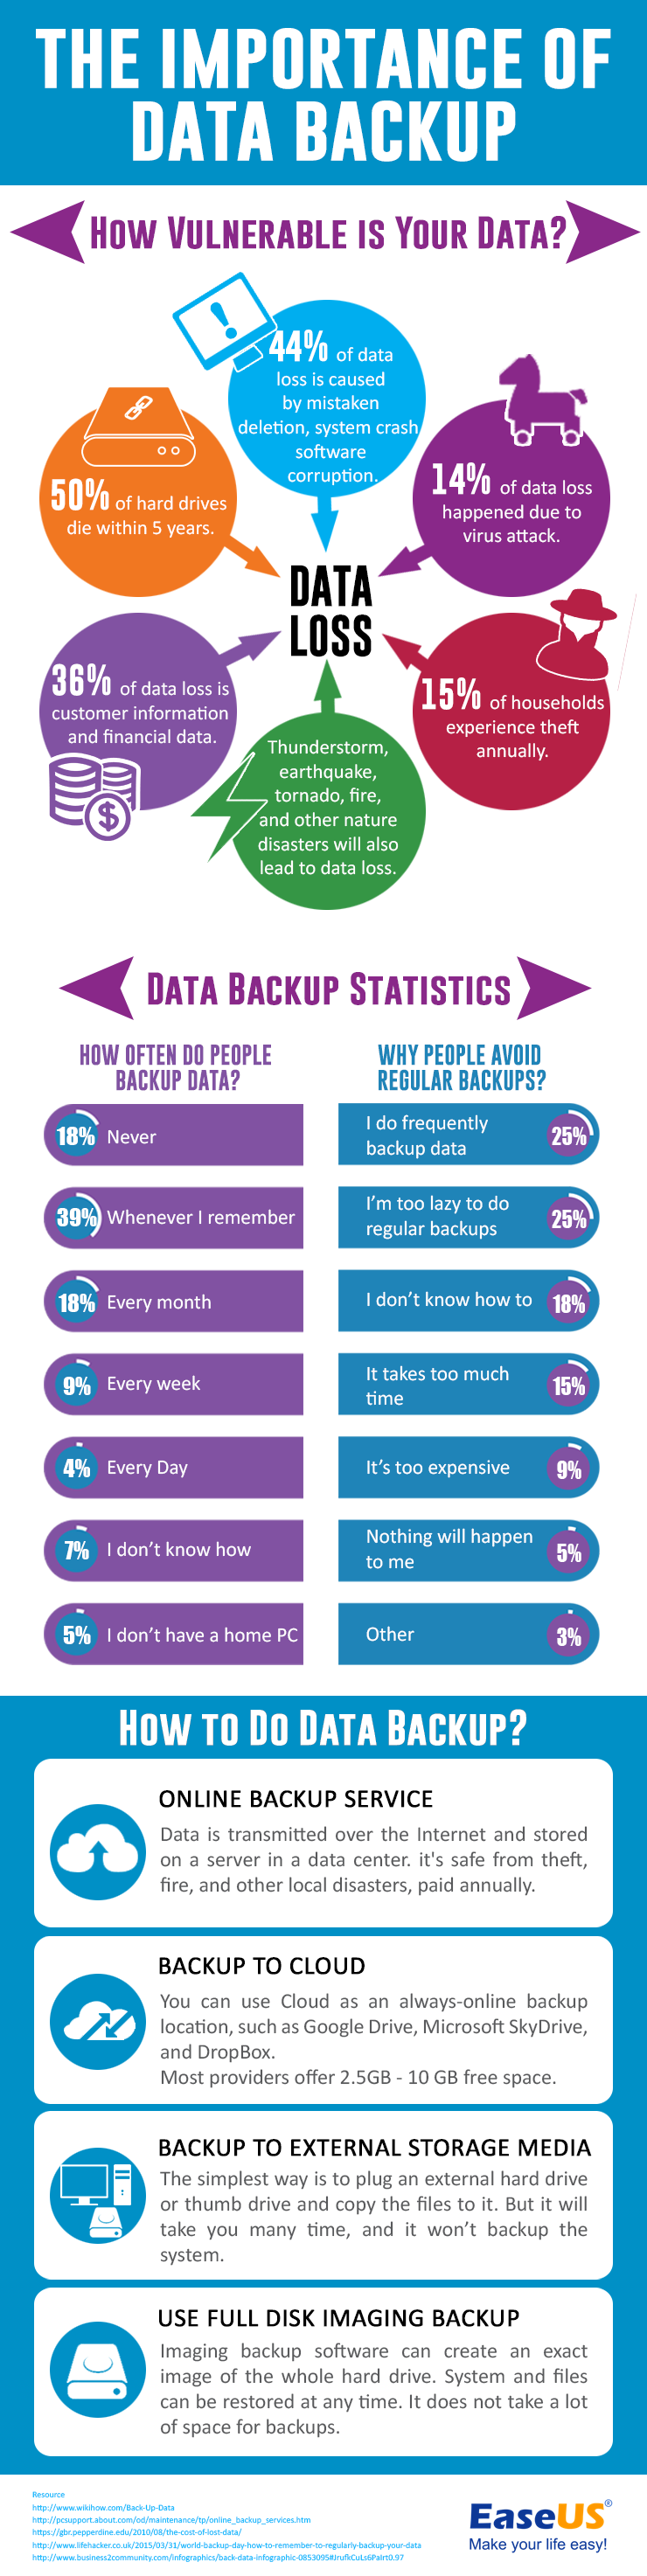 data_backup_facts_and_statistics